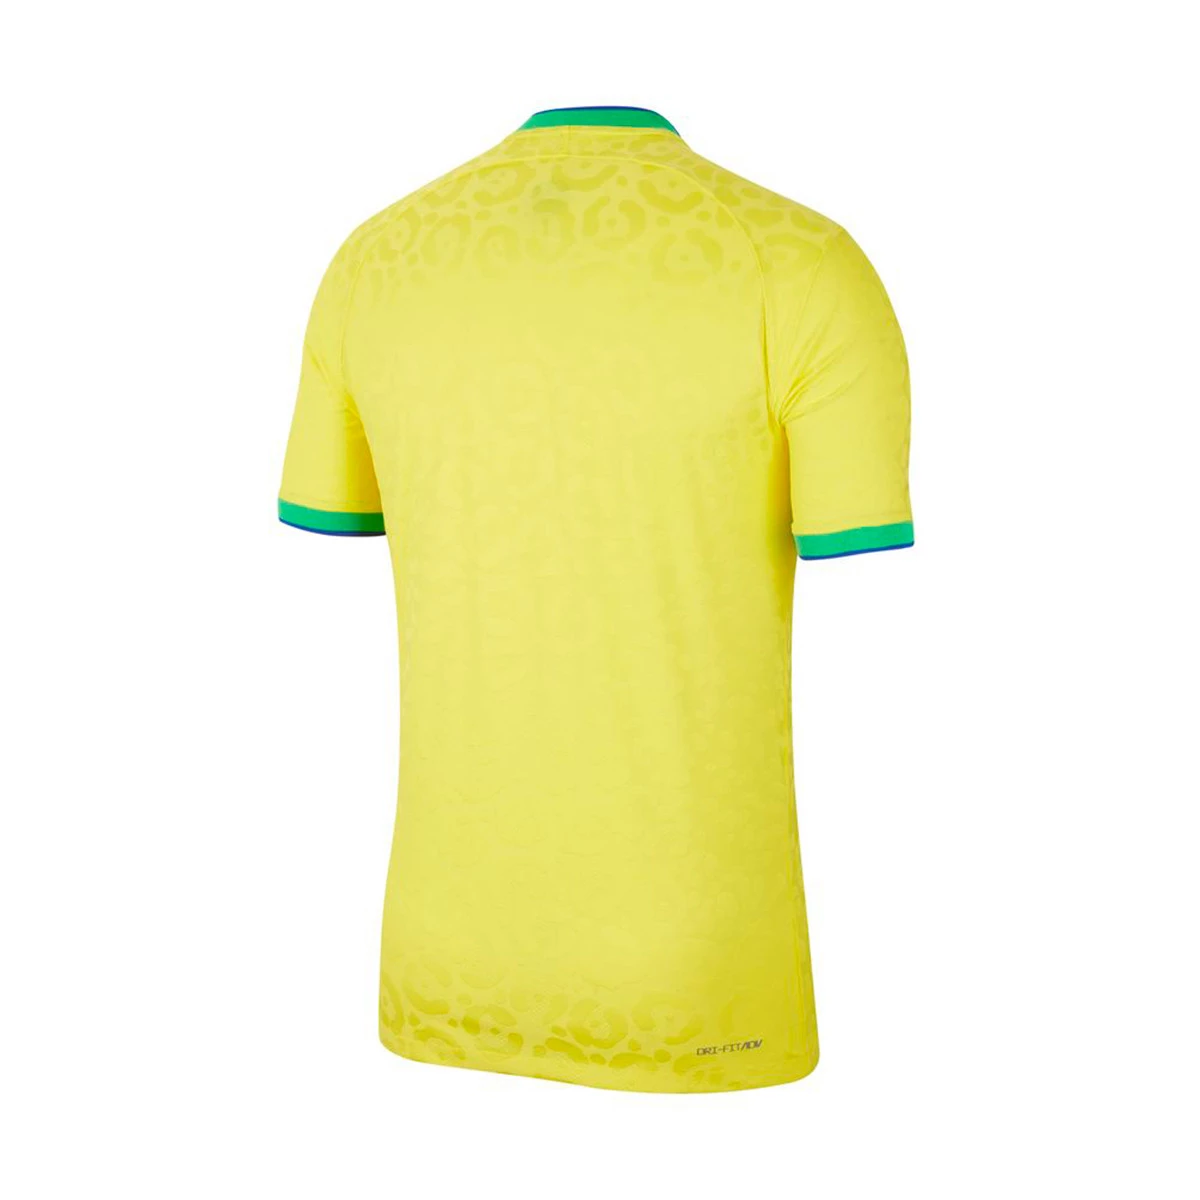 La camiseta de Brasil para la Copa América - Blogs - Fútbol Emotion